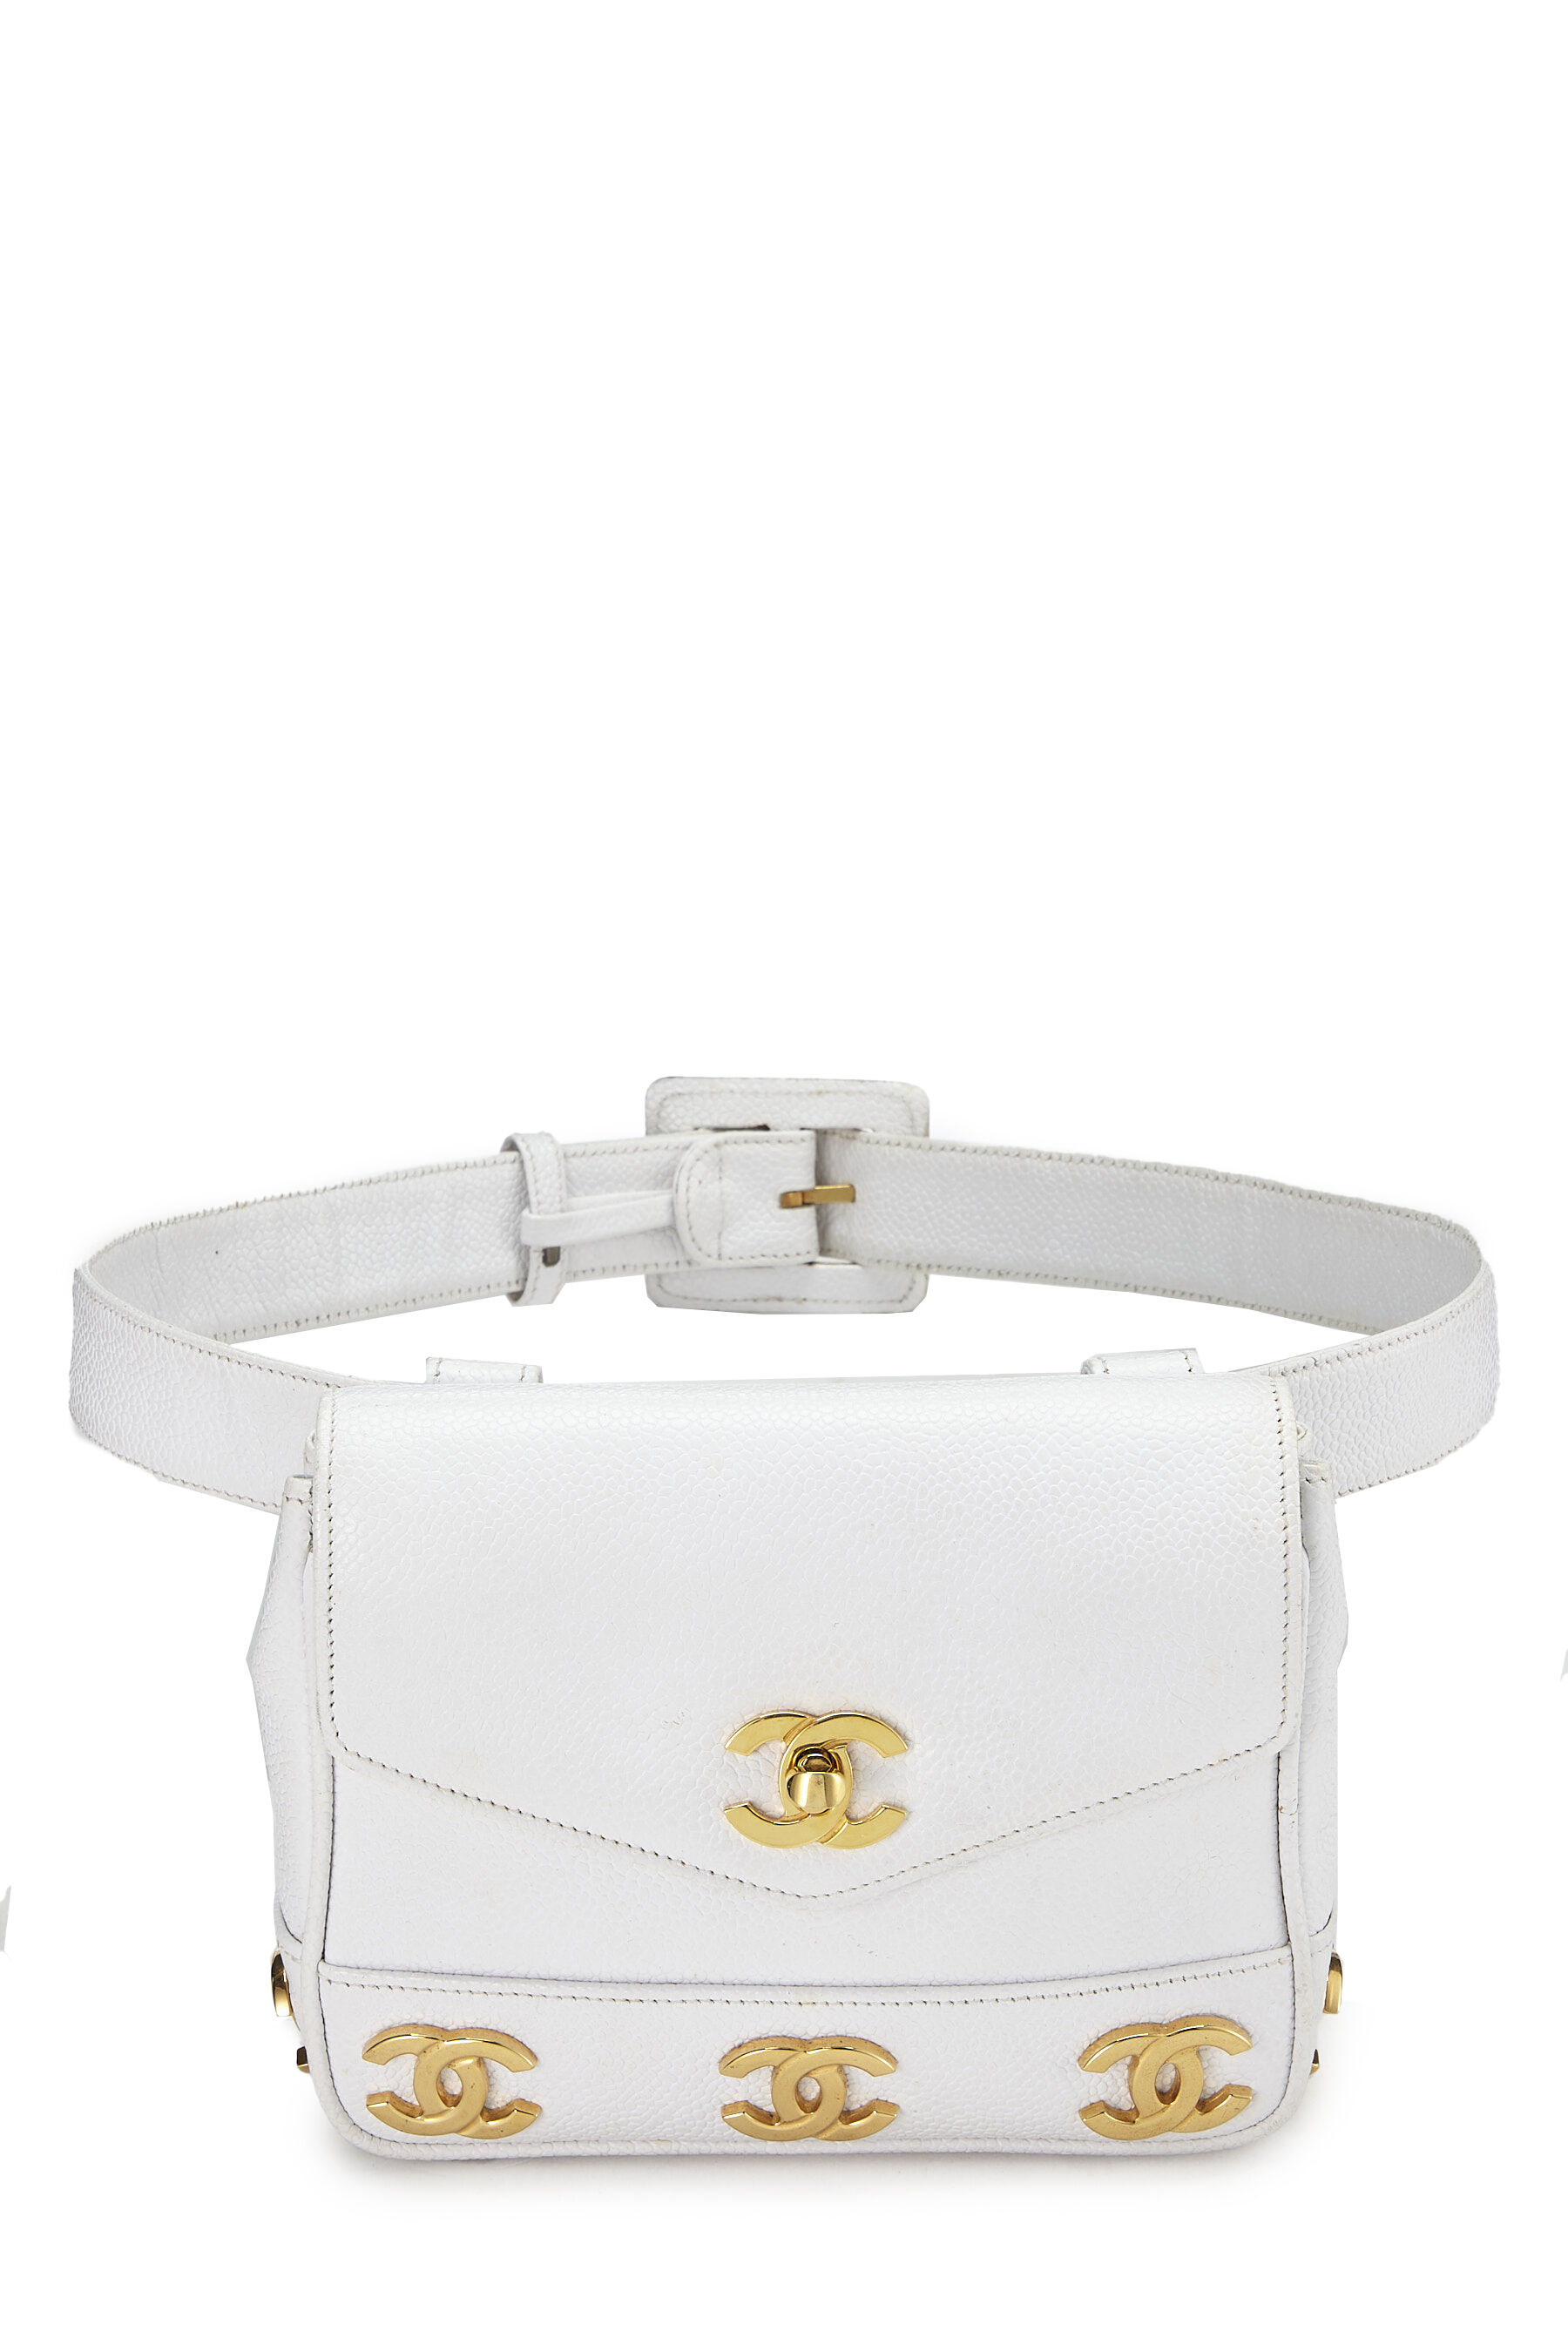 Chanel - White Caviar 3 'CC' Belt Bag